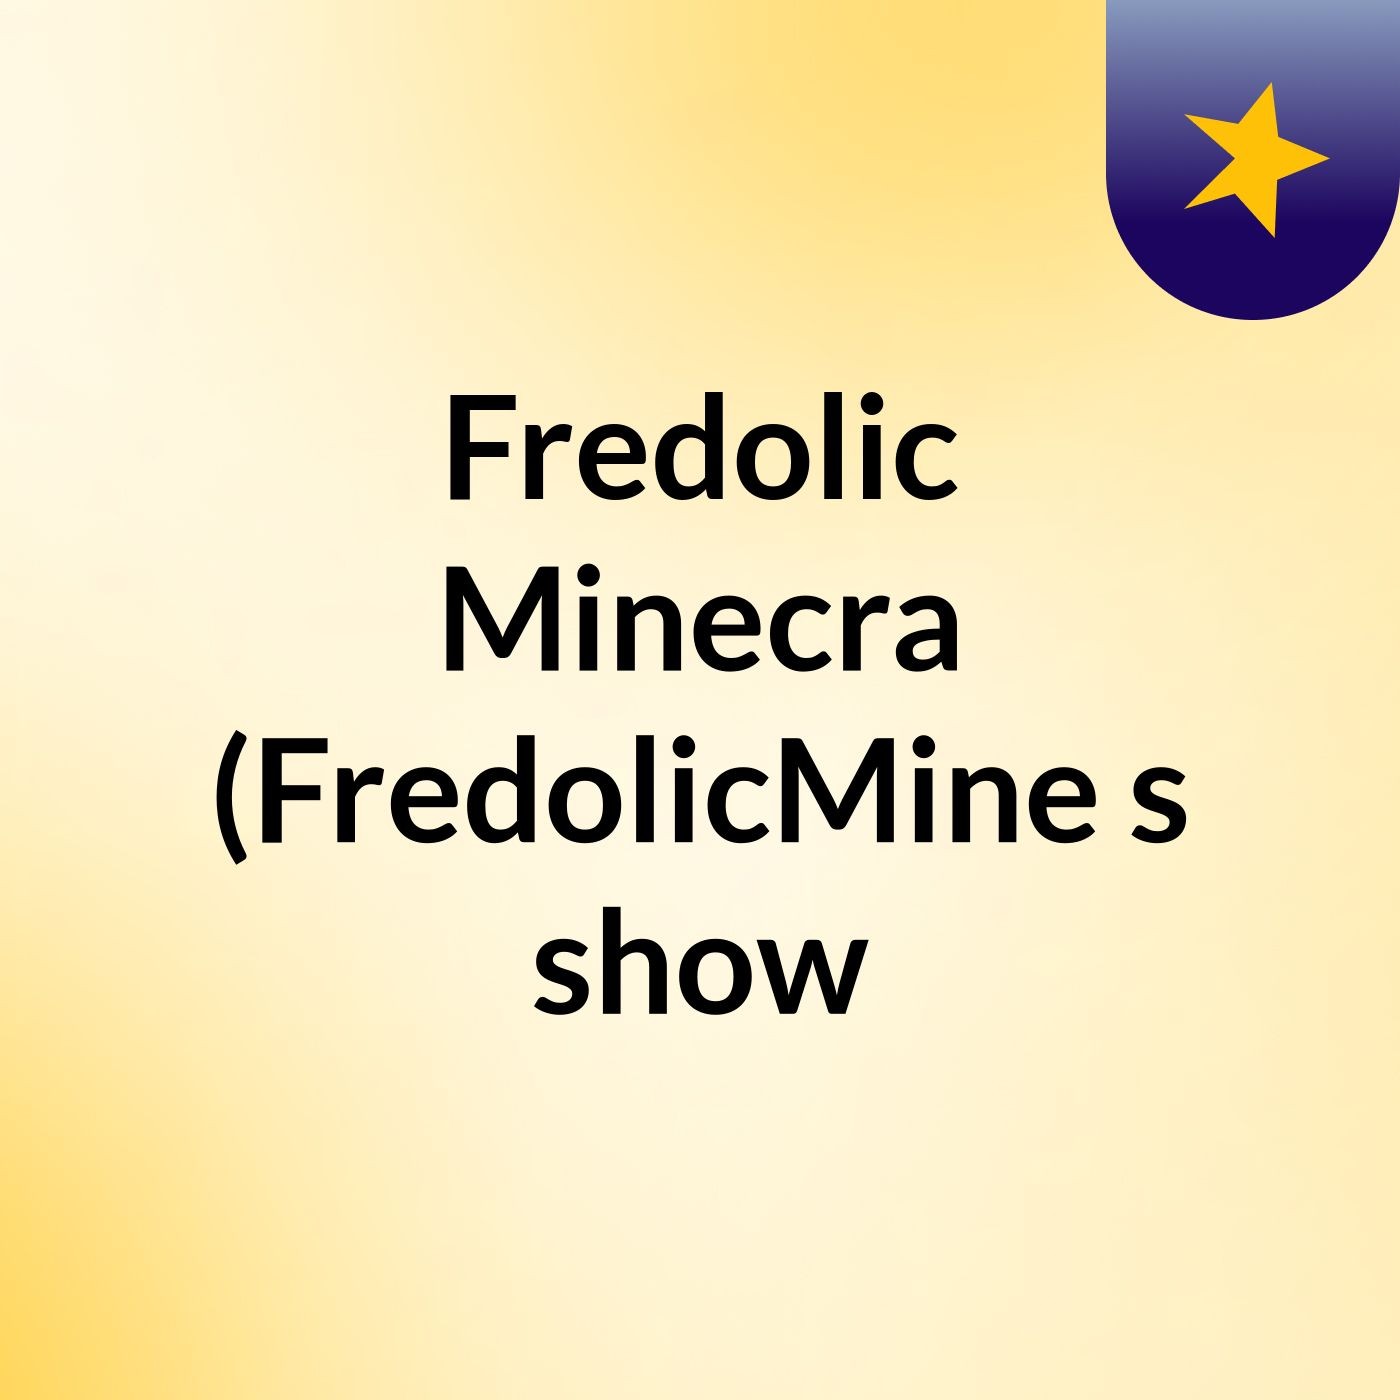 Fredolic Minecra (FredolicMine's show